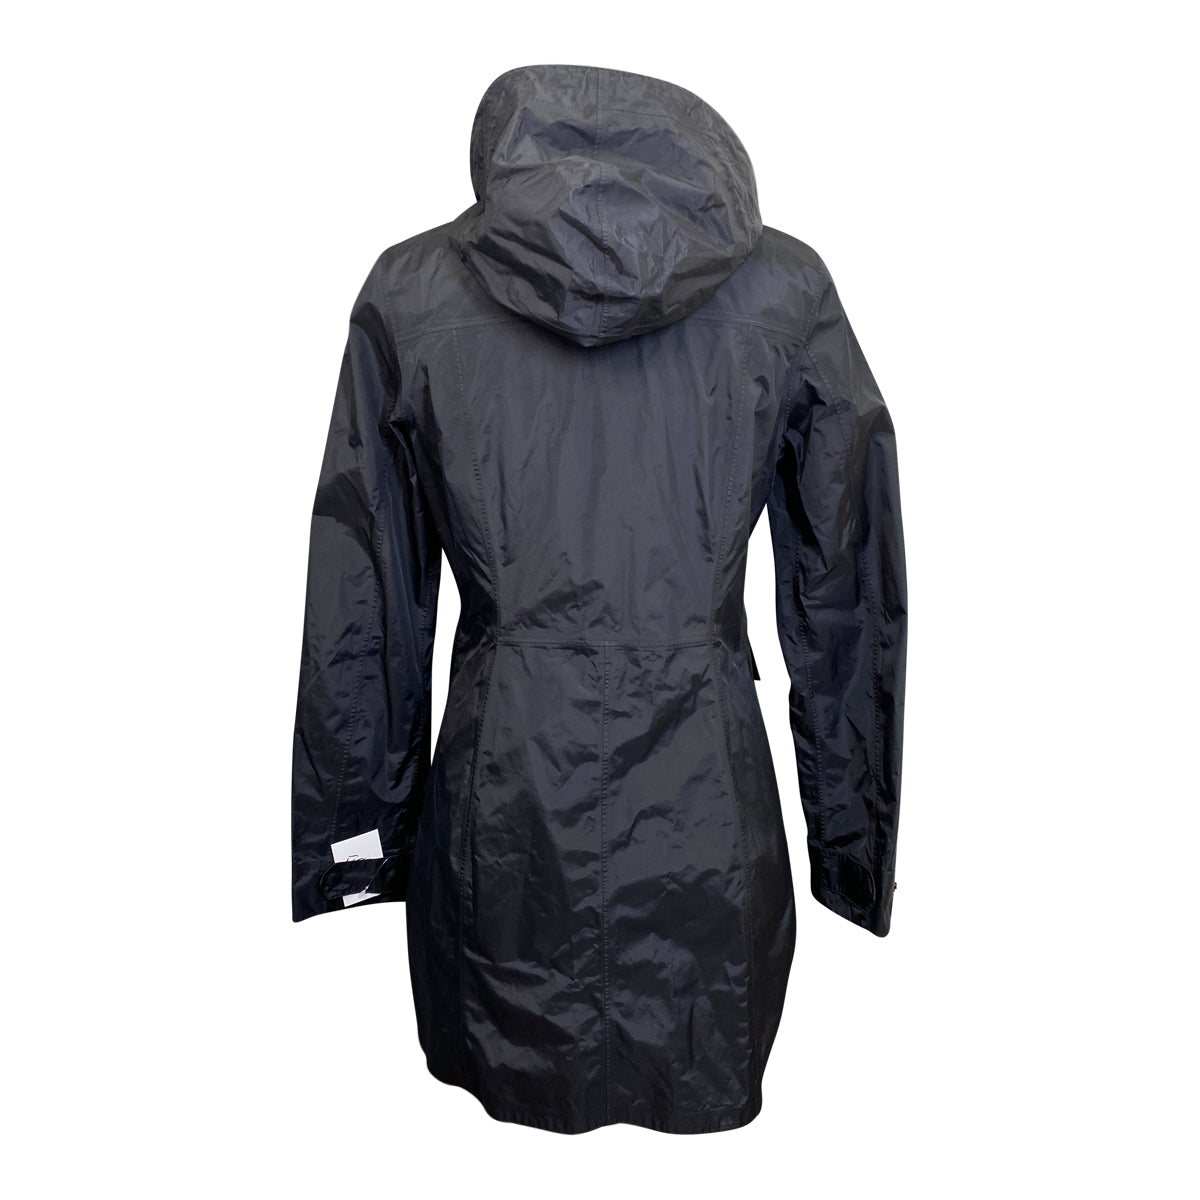 Patagonia Rain Jacket in Black